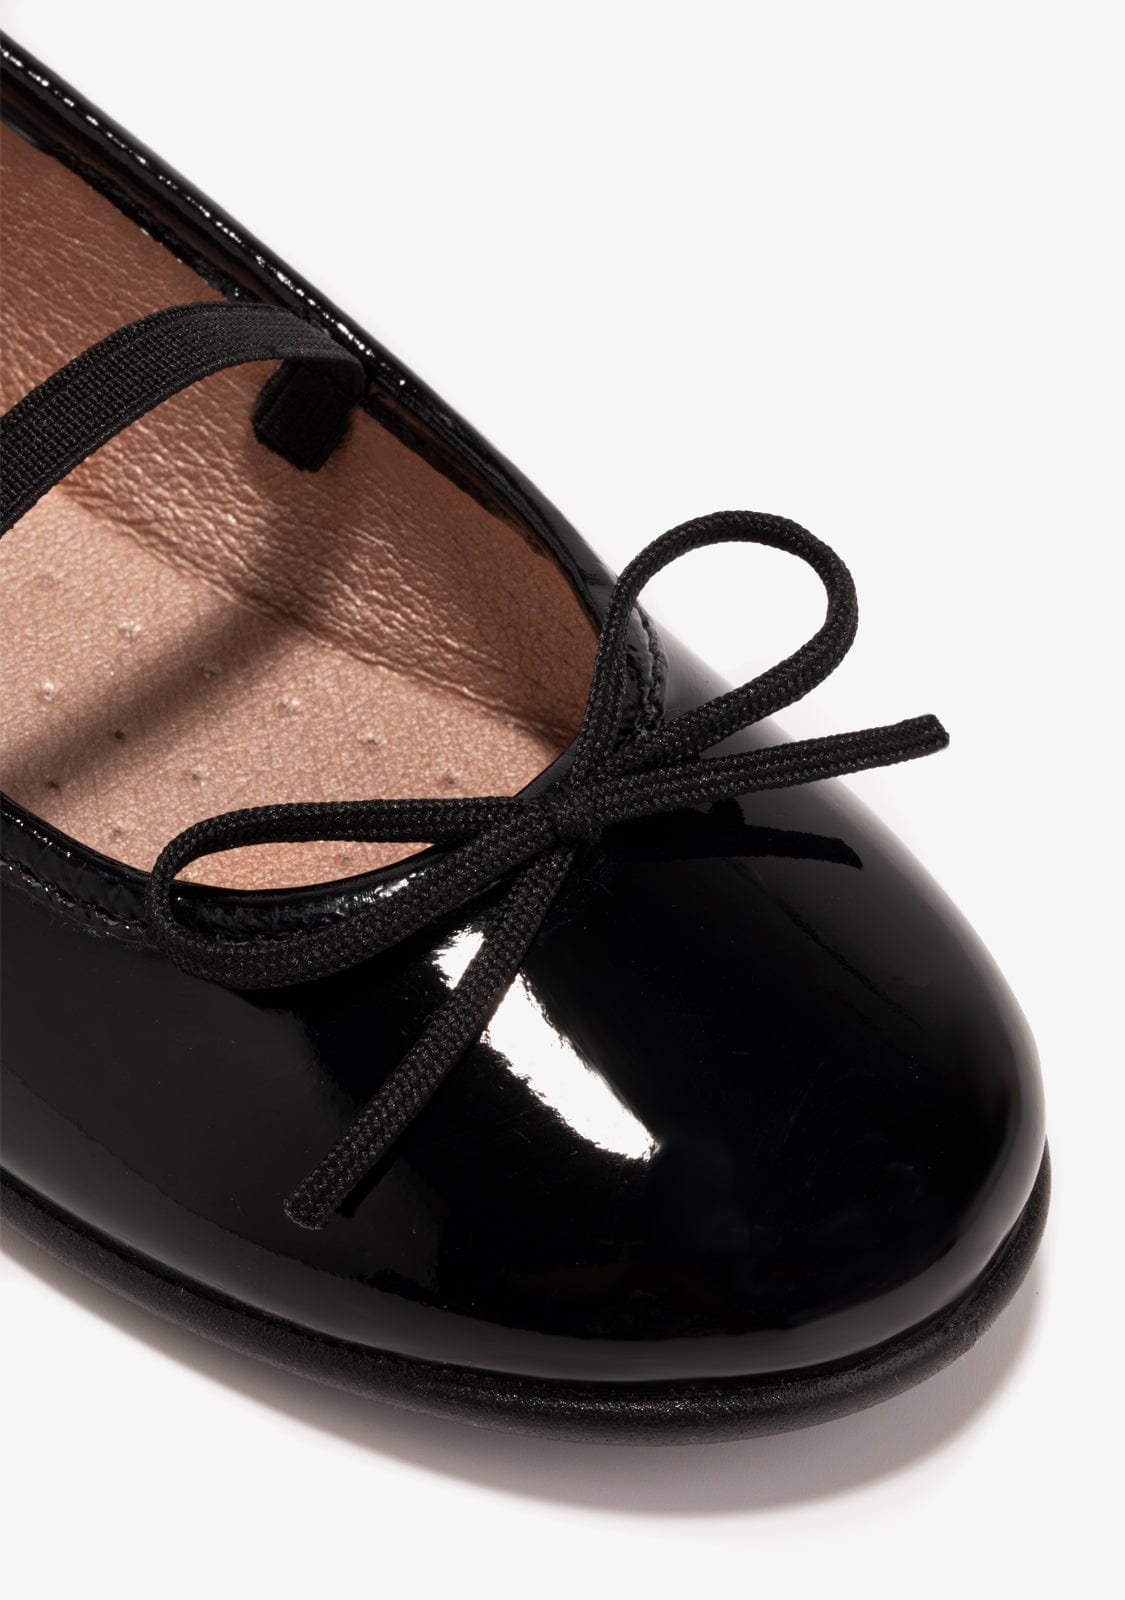 Black Ballerinas Patent Leather